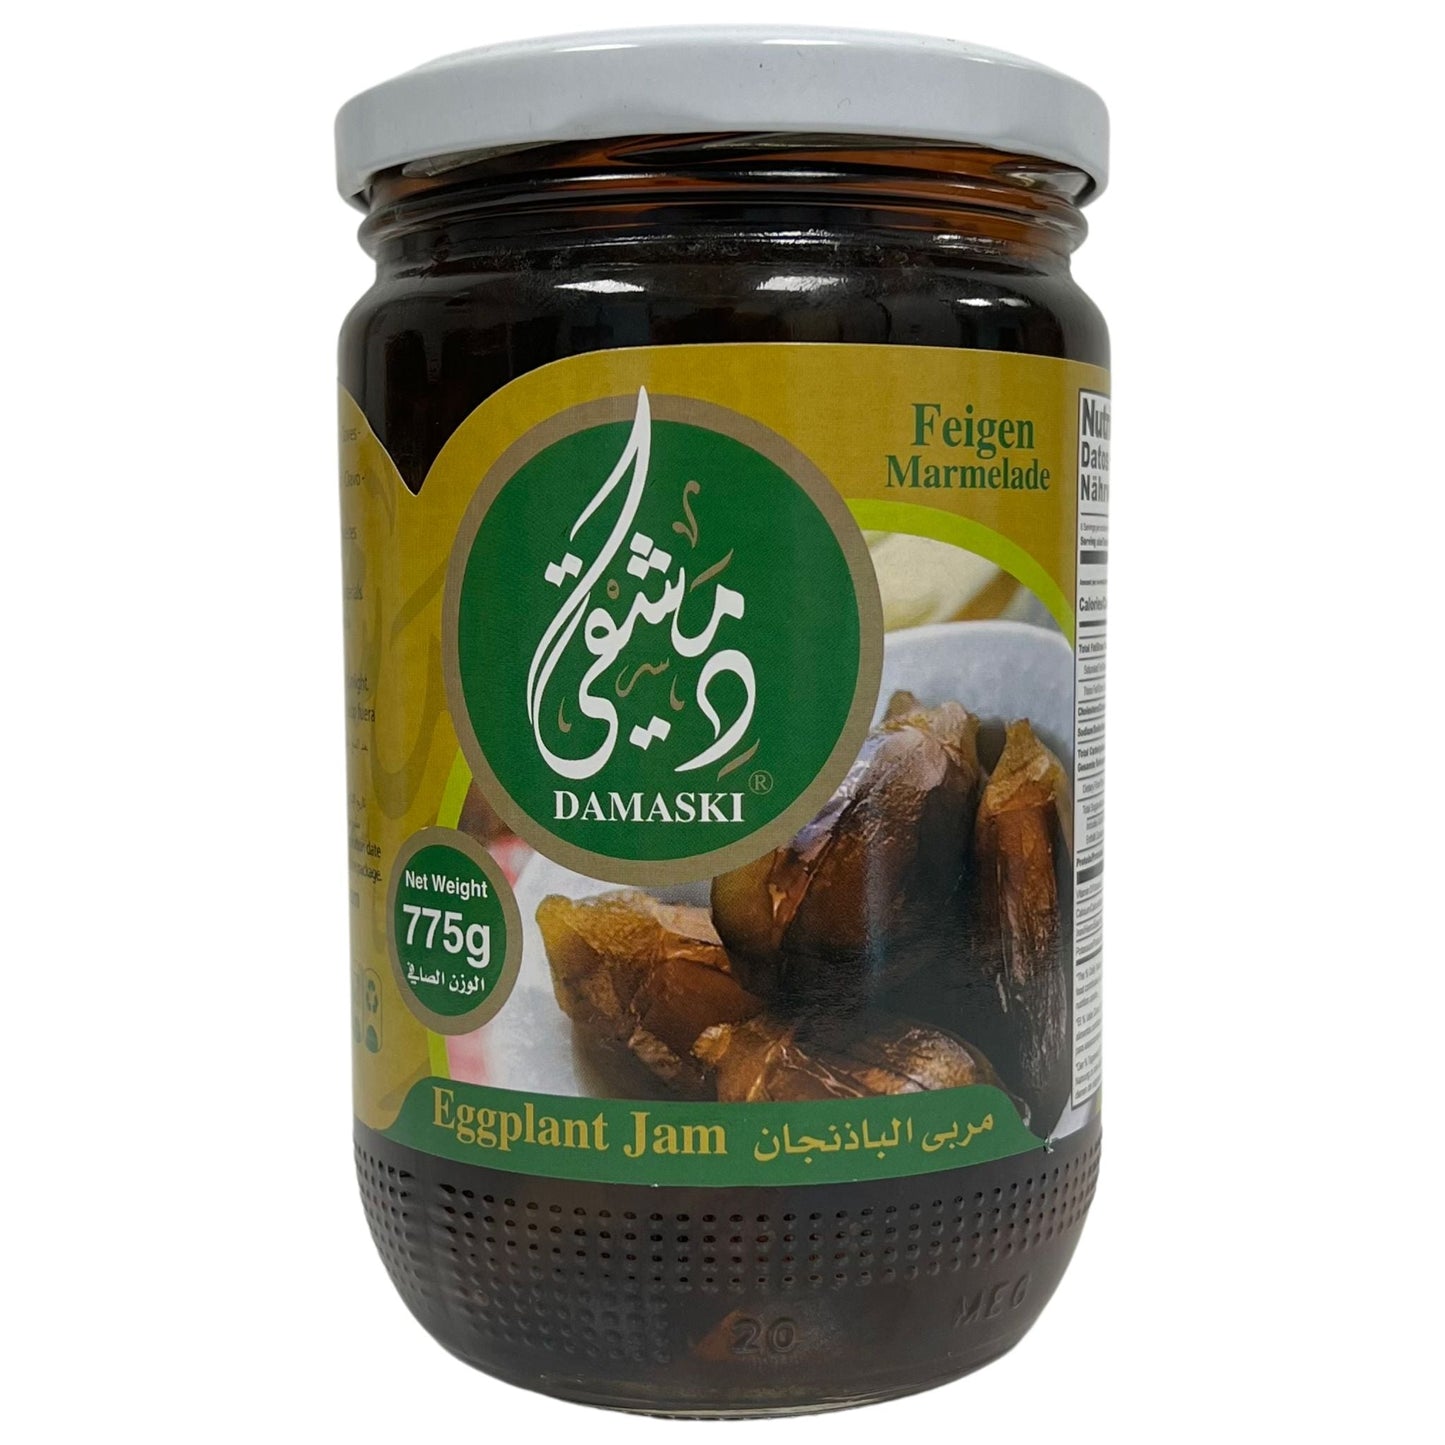 Damaski Eggplant Jam With Walnuts 775g